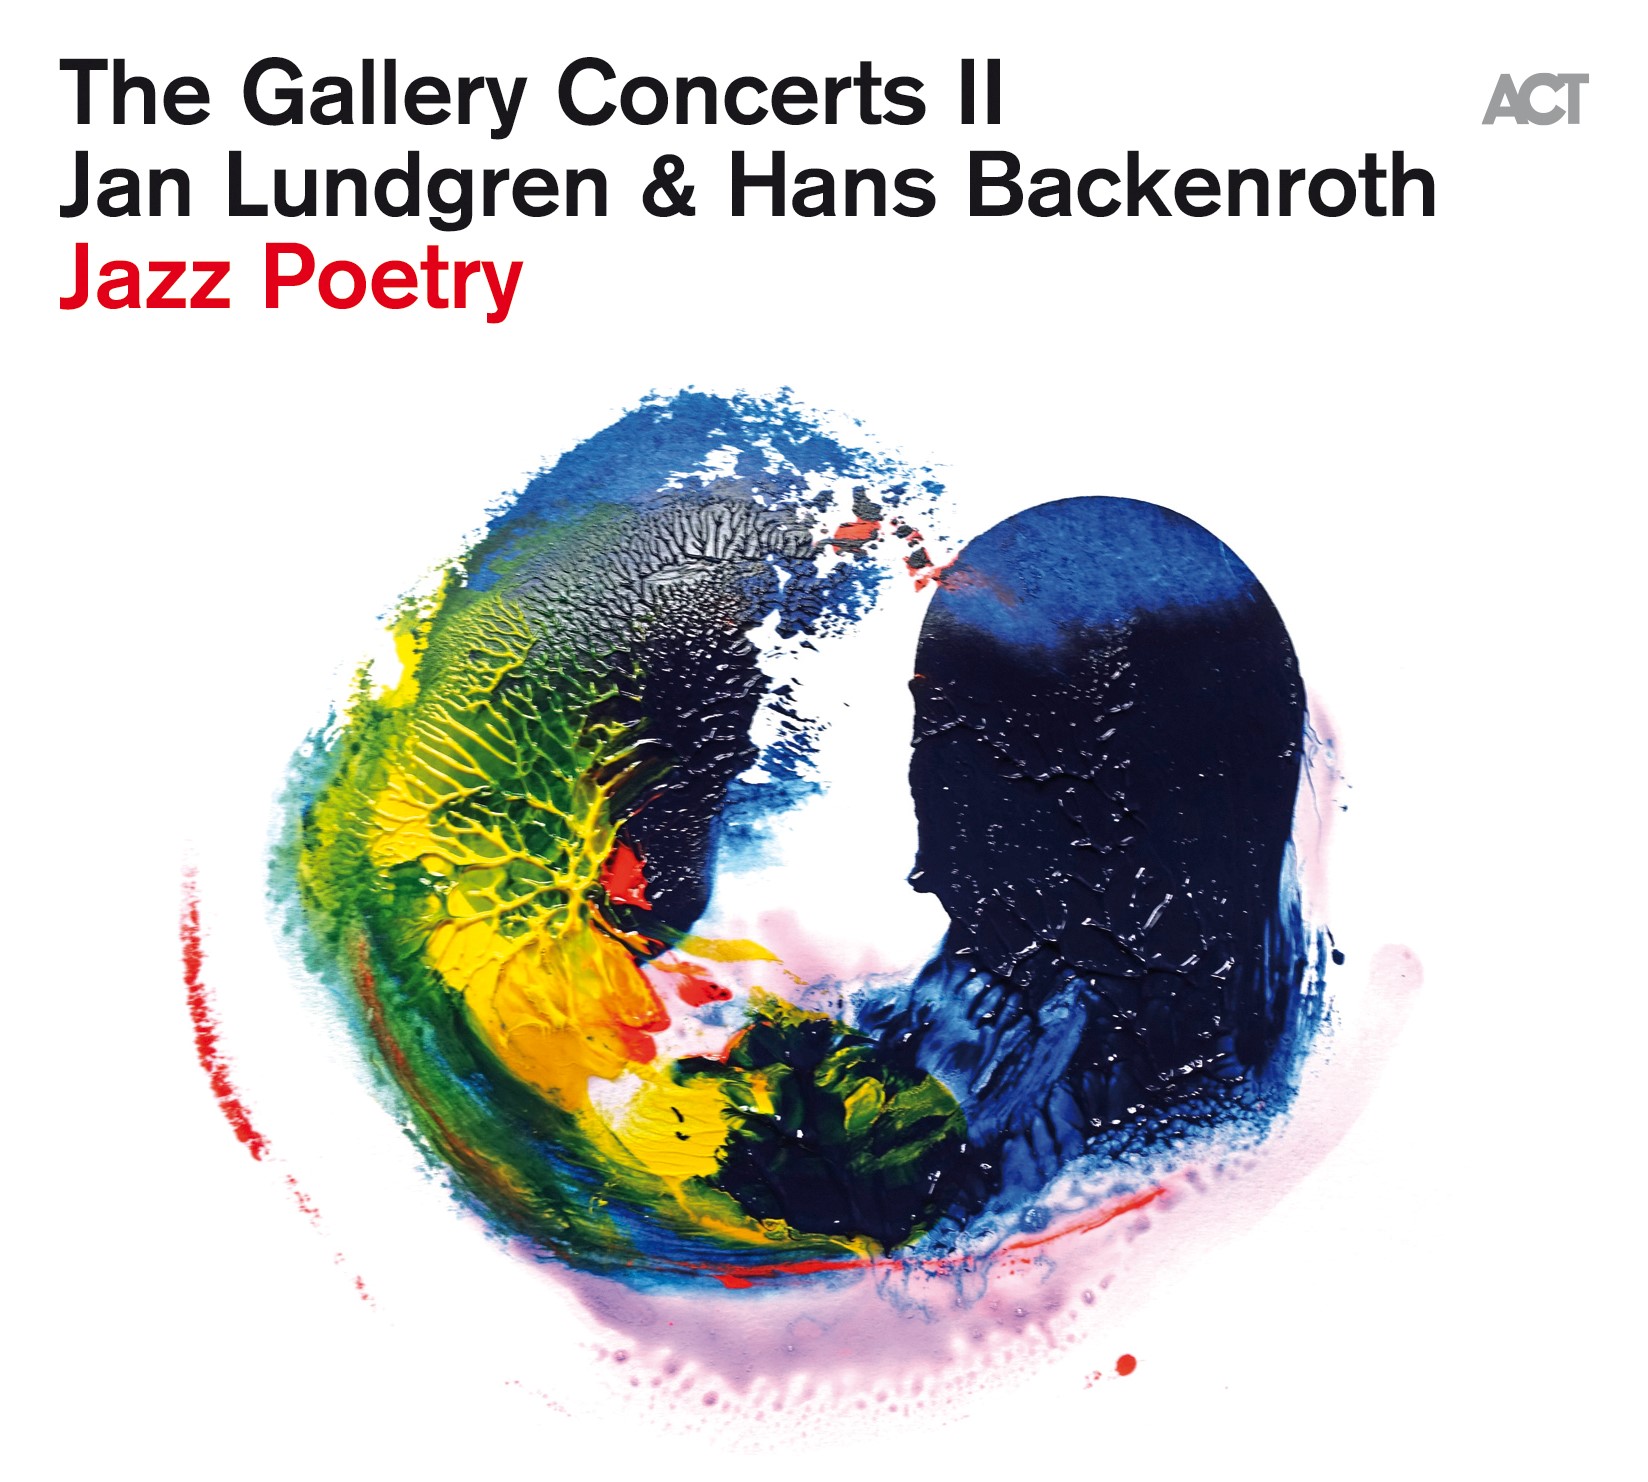 The Gallery Concerts II: Jazz Poetry